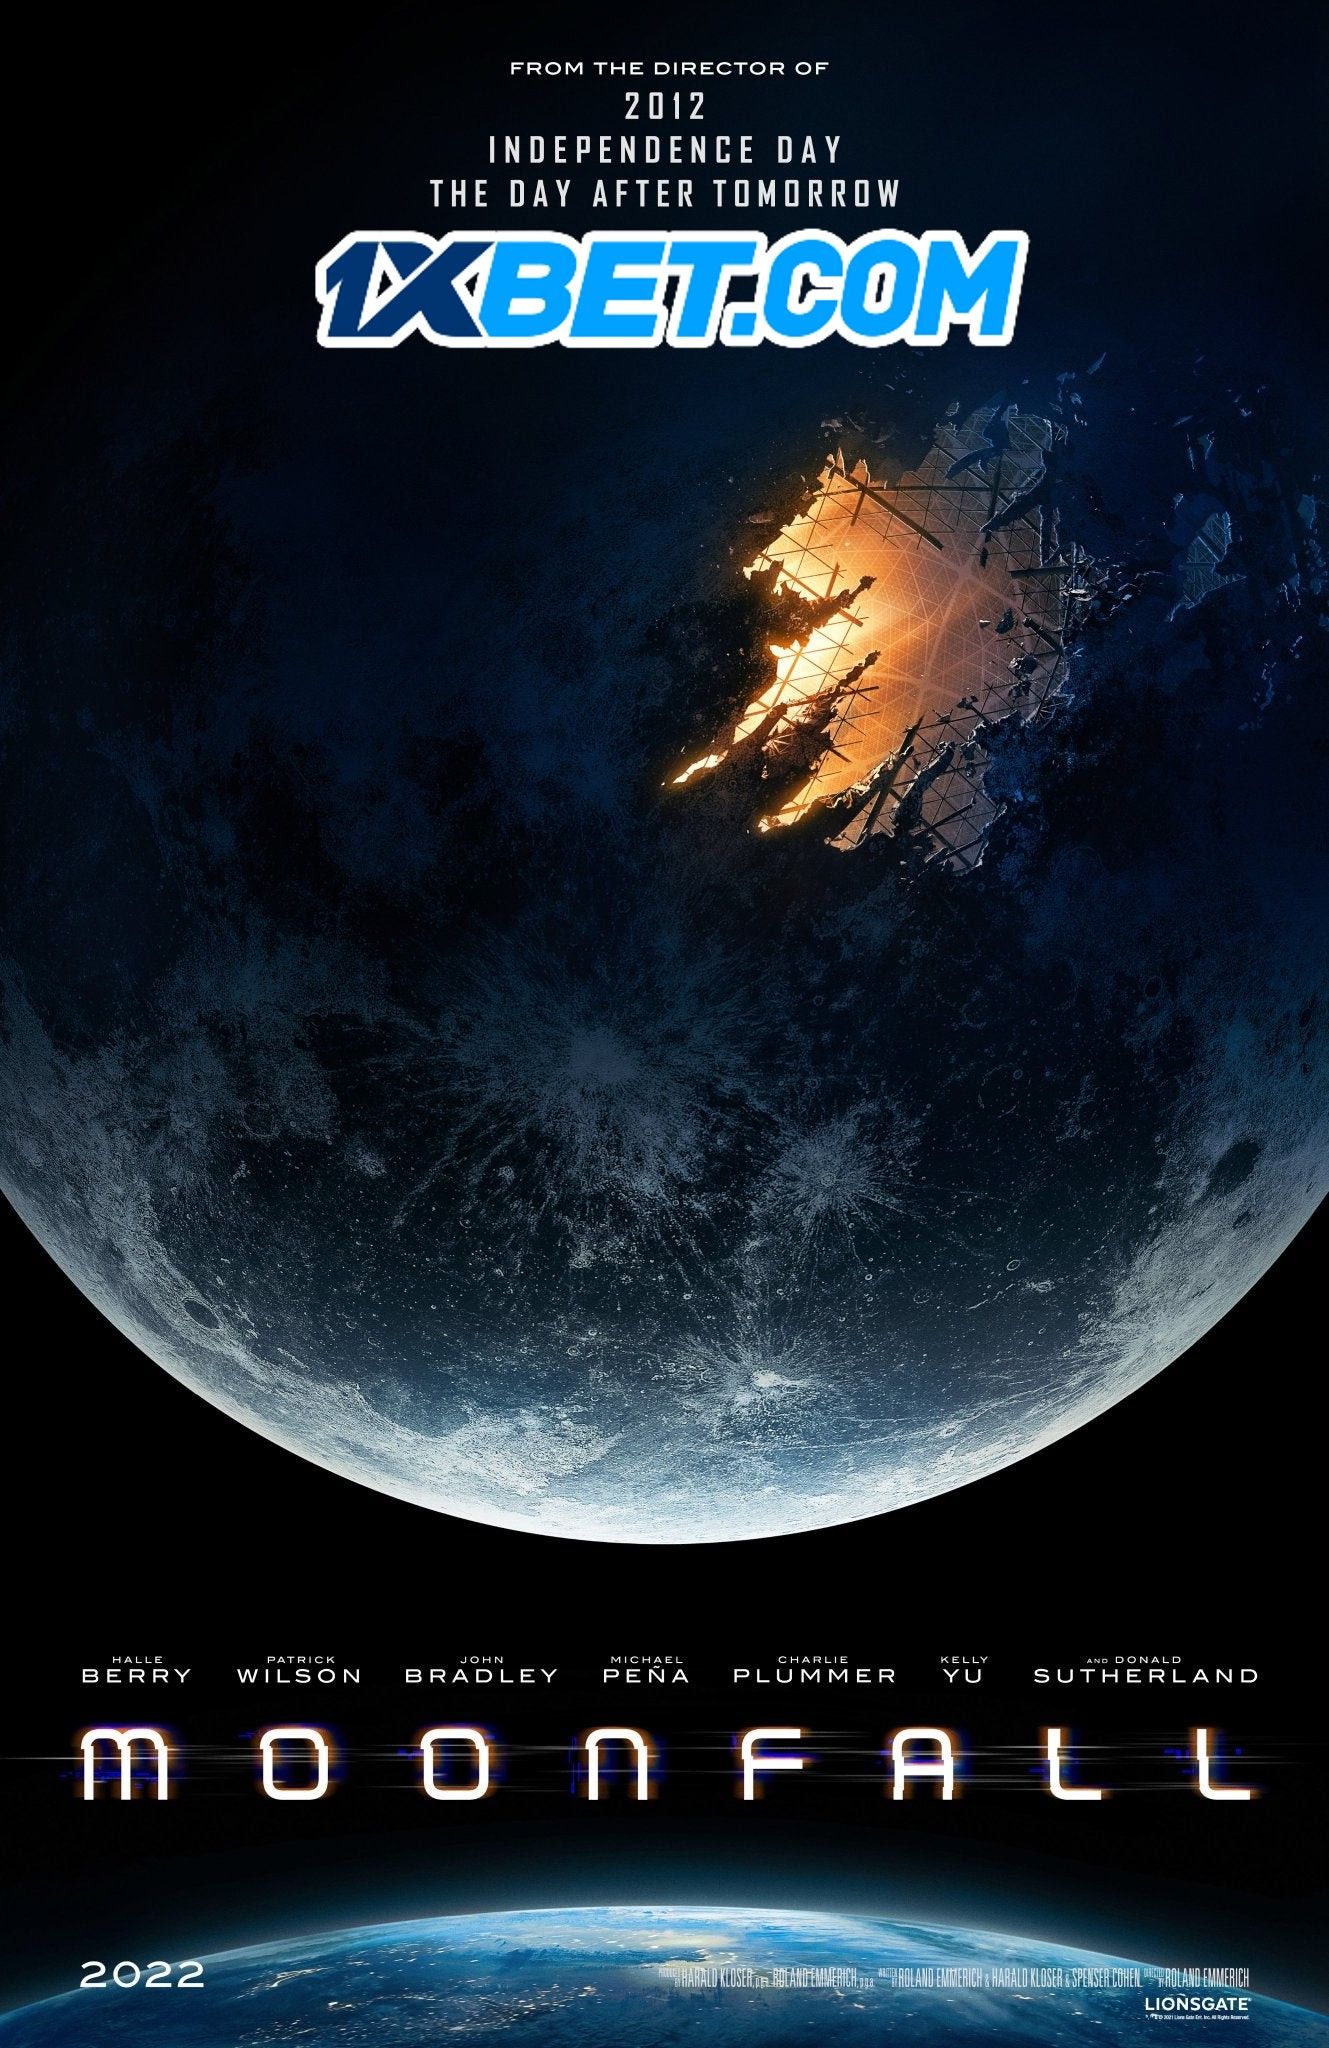 Moonfall (2022) Hindi Dubbed HDCAM download full movie